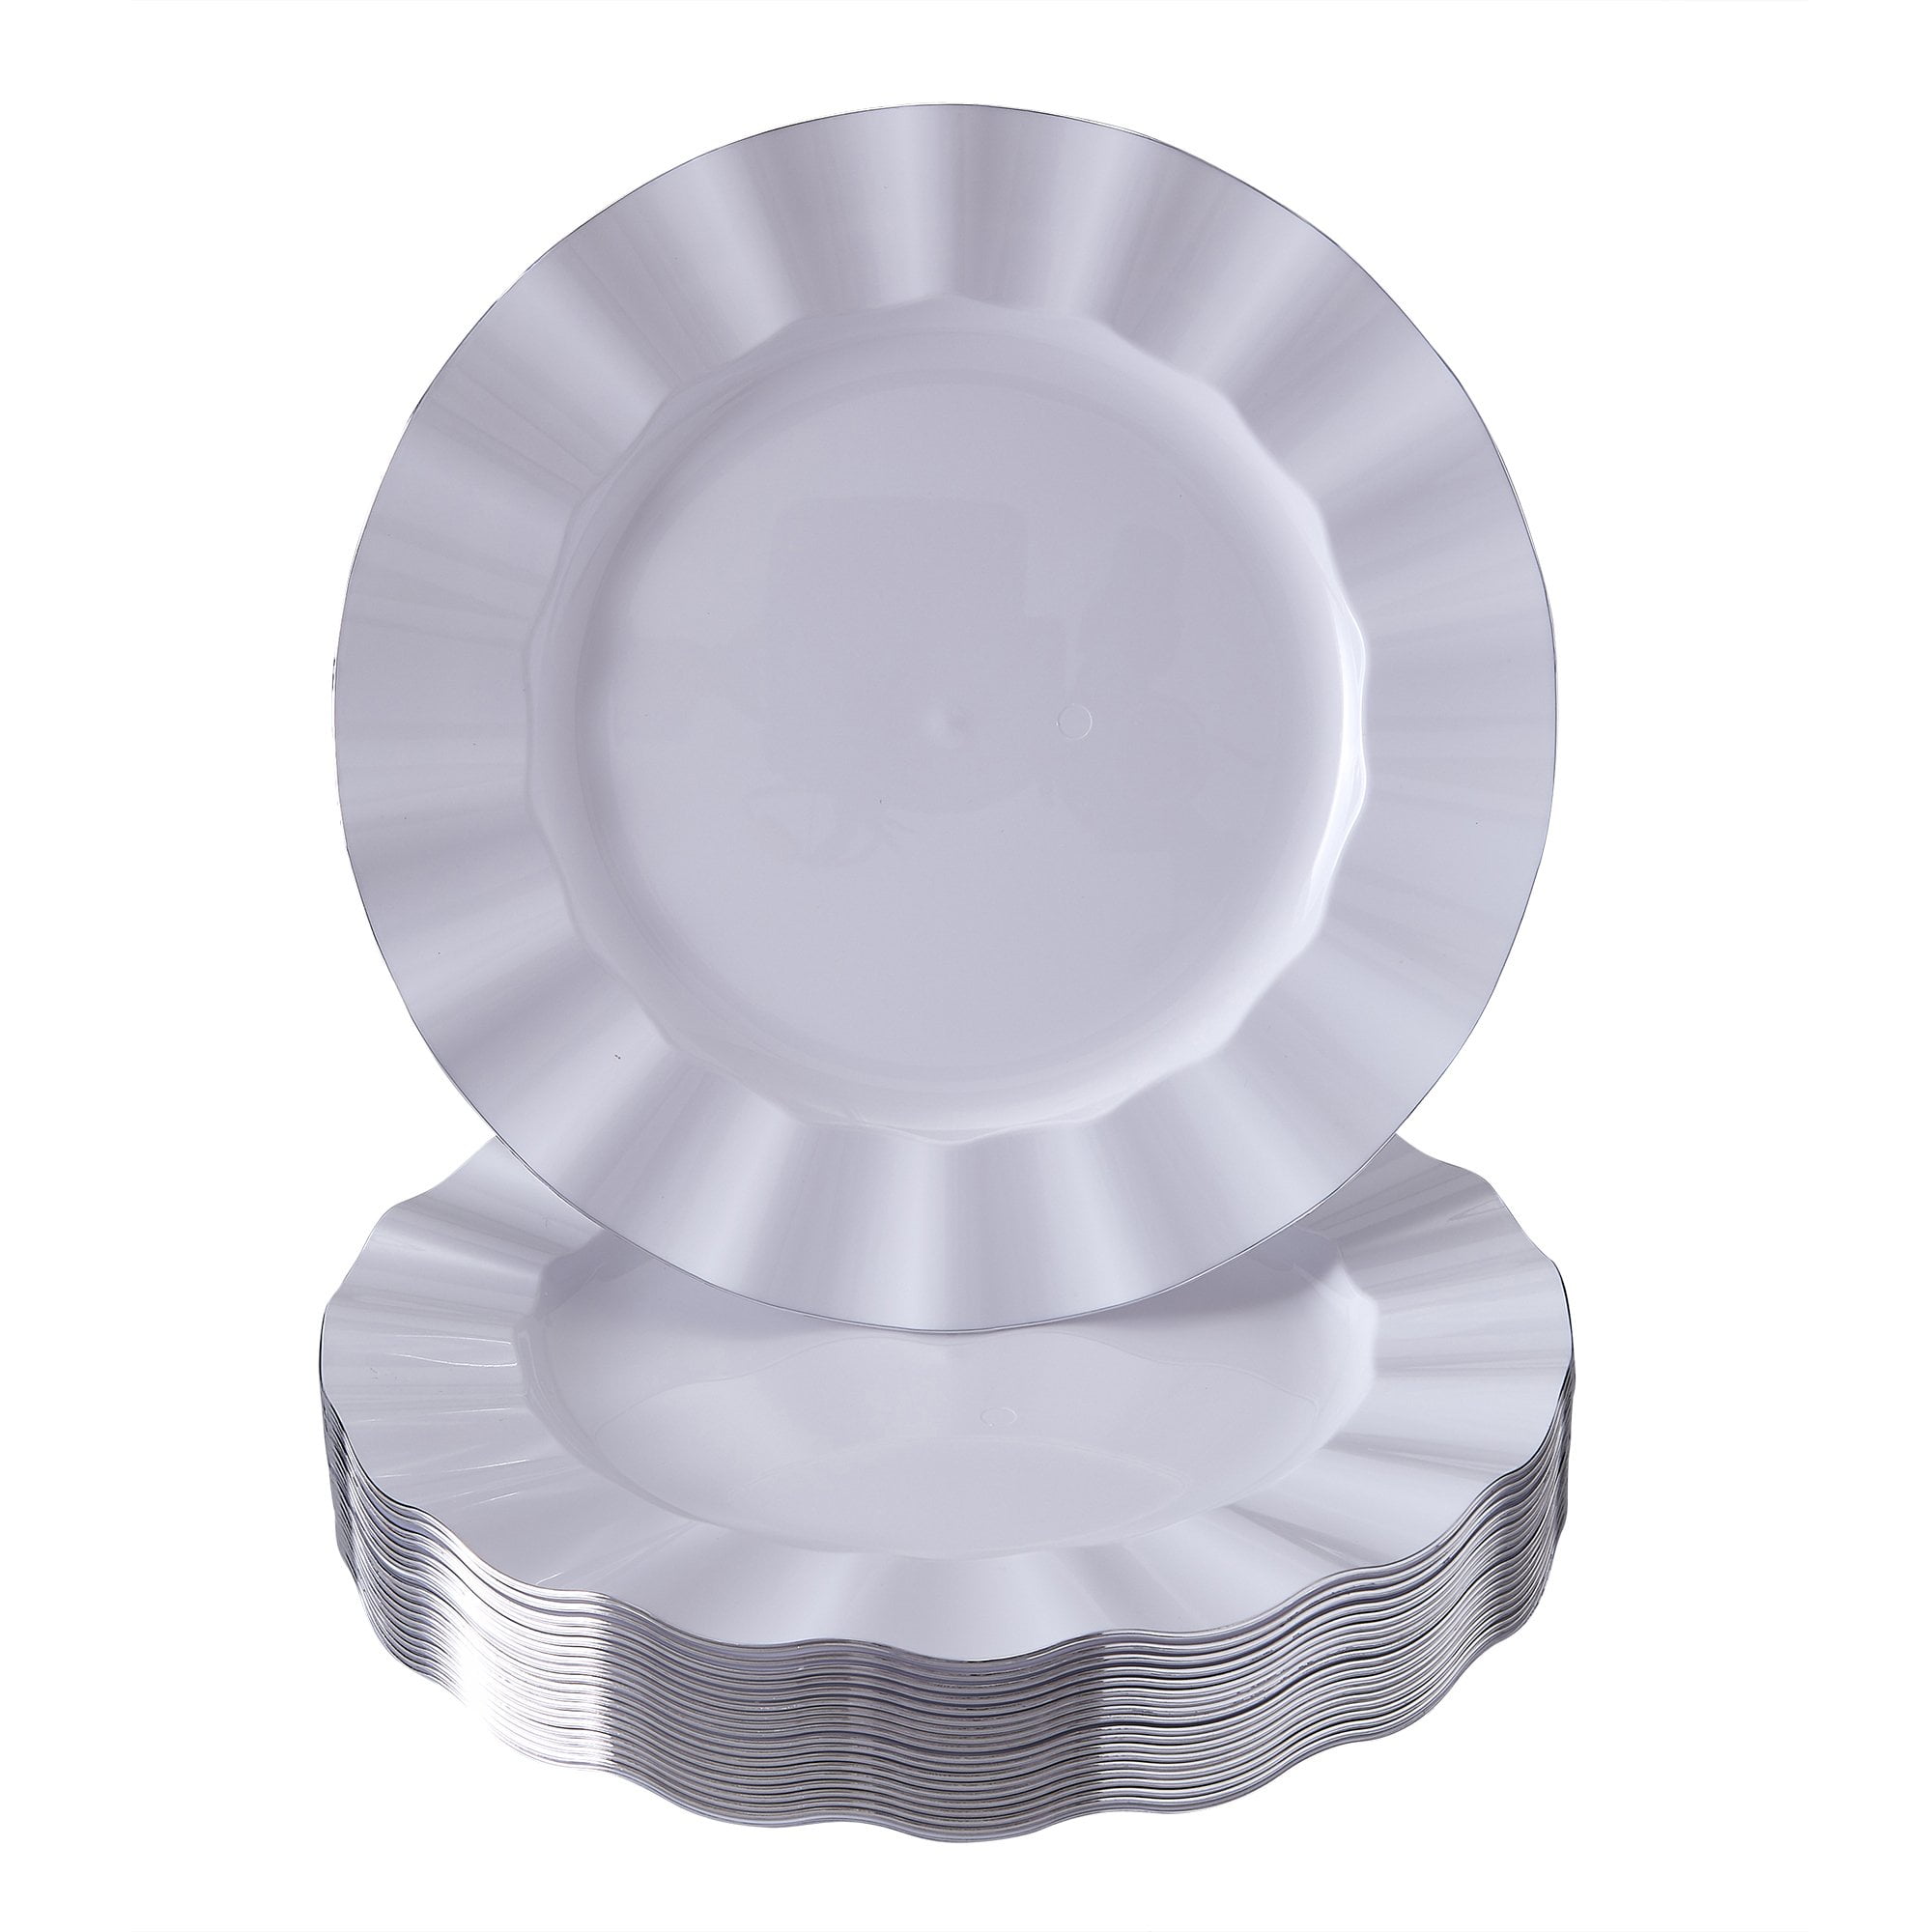 Premium Quality Heavyweight Disposable Plastic Plates China Like Design Plates